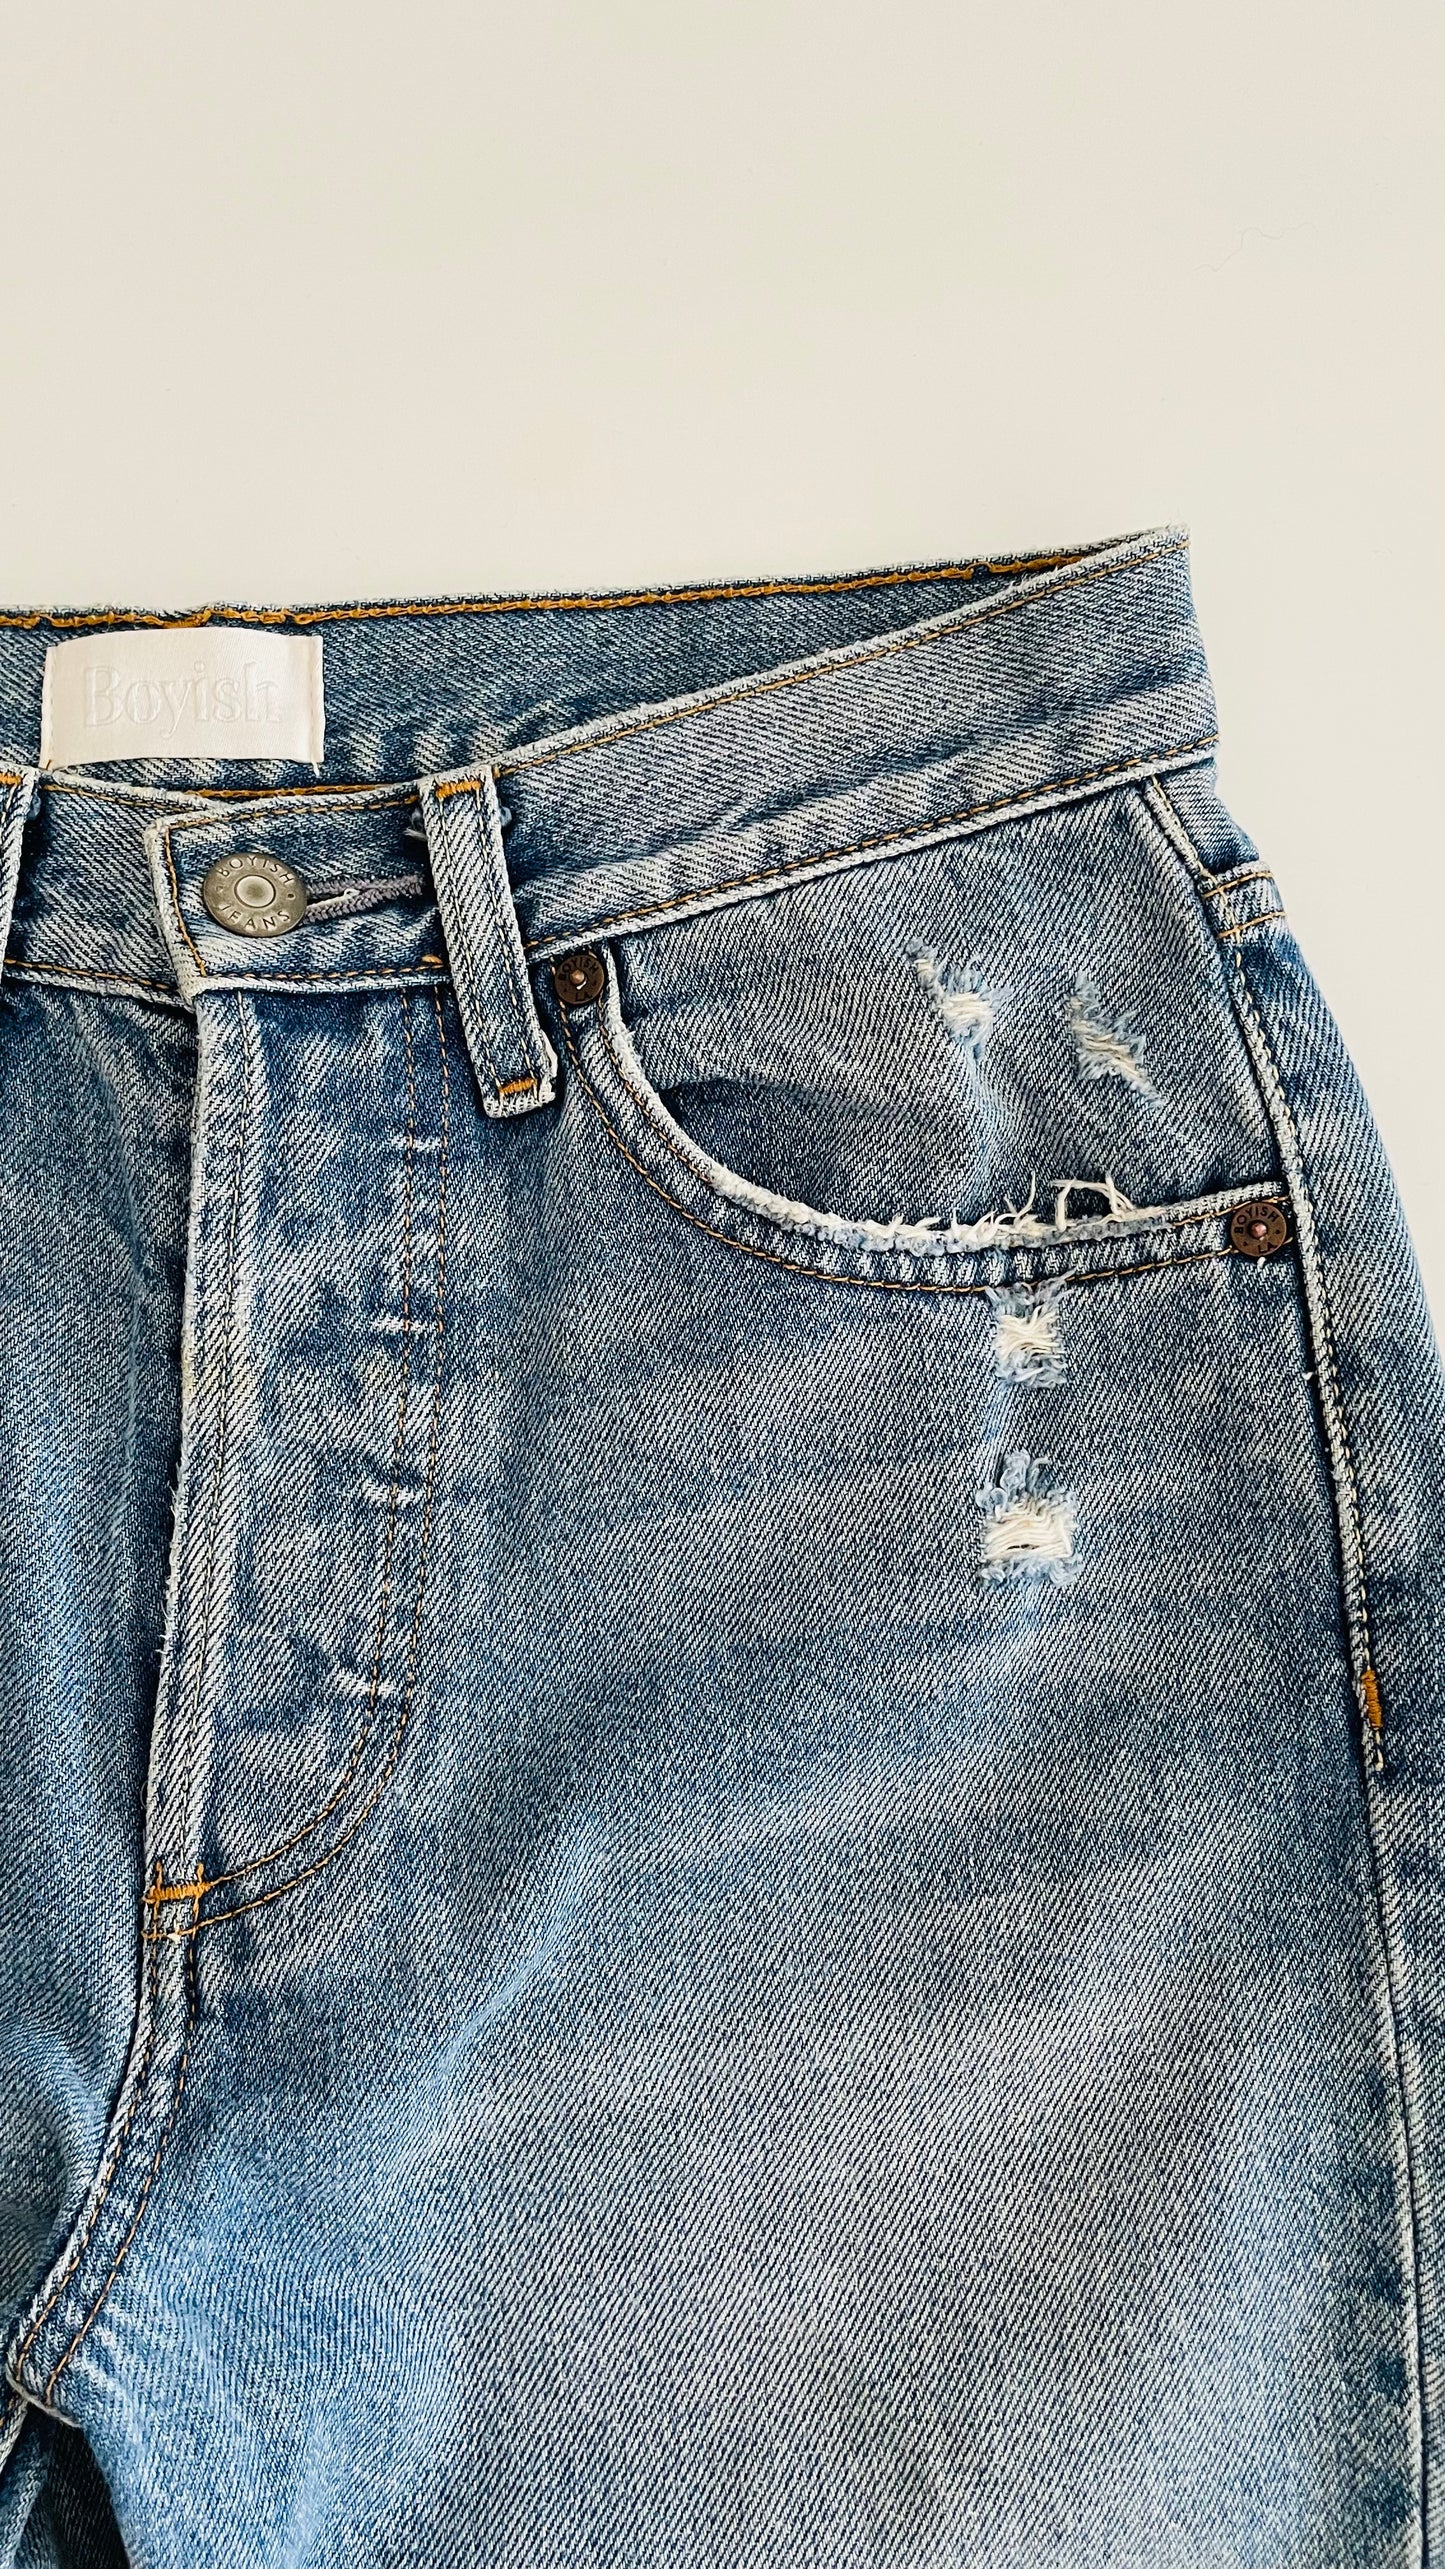 Pre-Loved Boyish light blue vintage wash slim fit jeans - Size 25 x 28